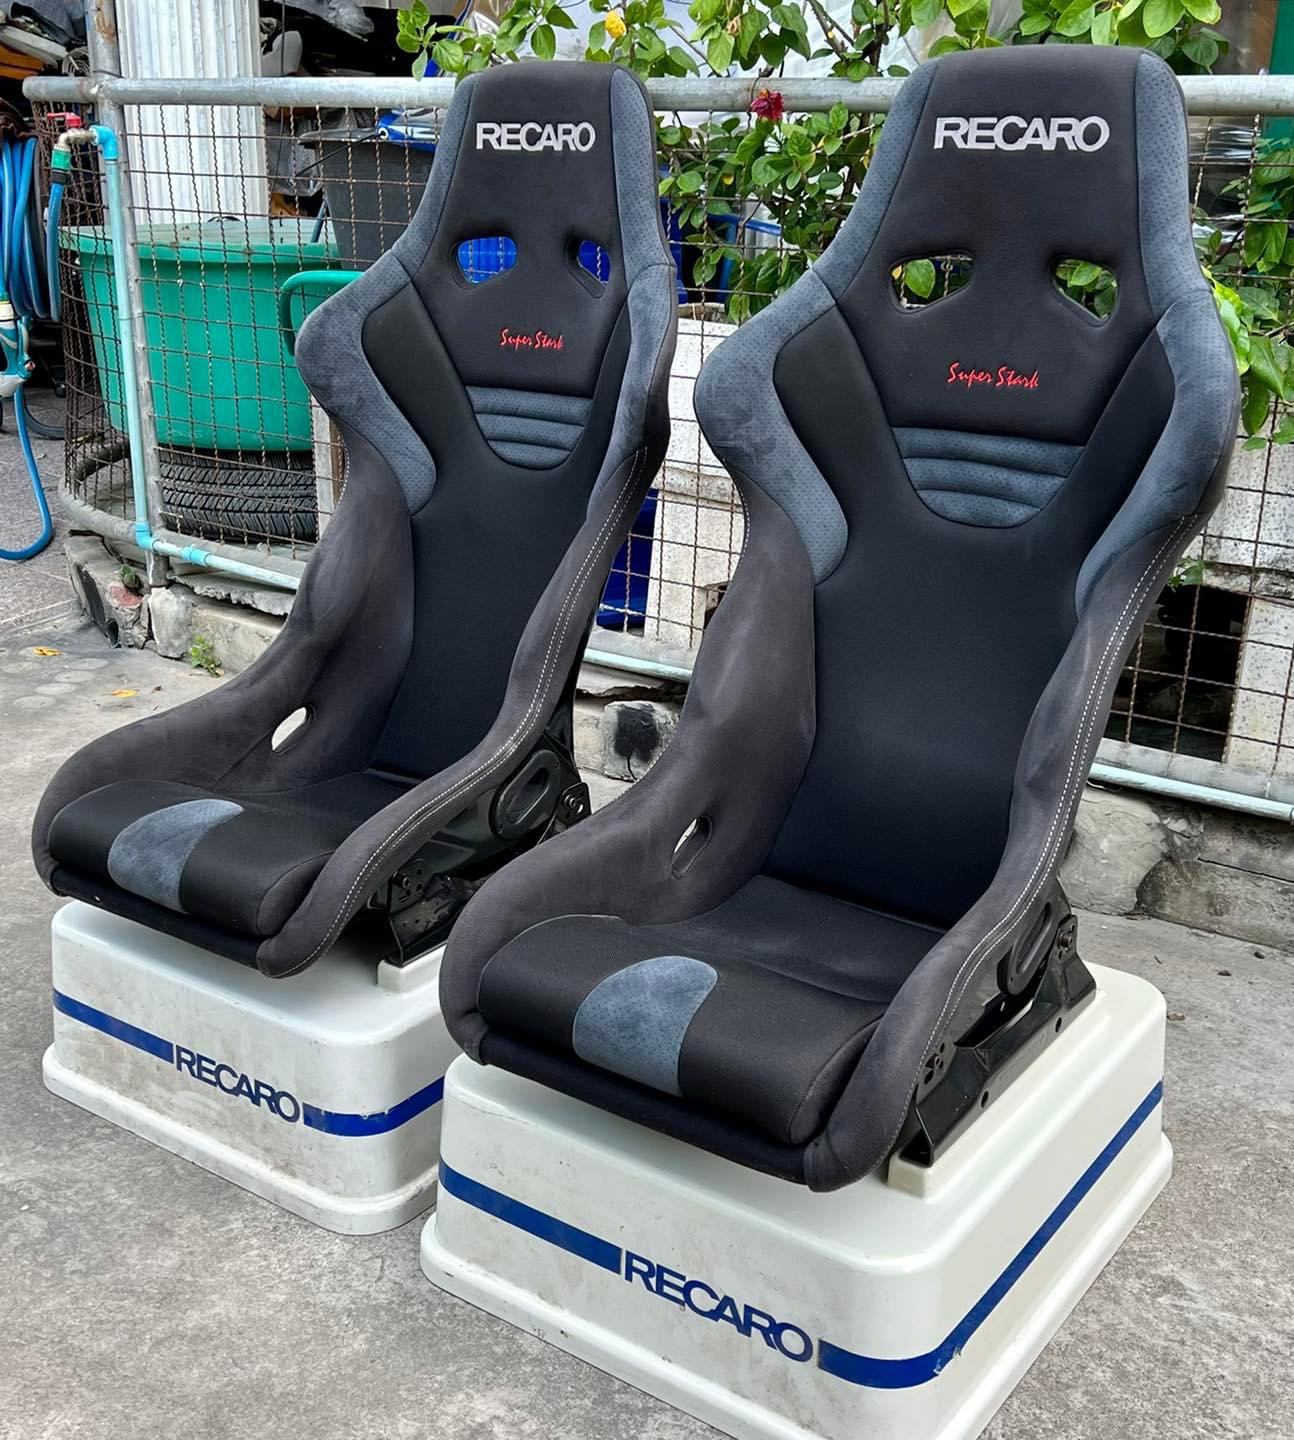 Recaro RS-G SuperStark Bucket Seats | For Racing and Gaming